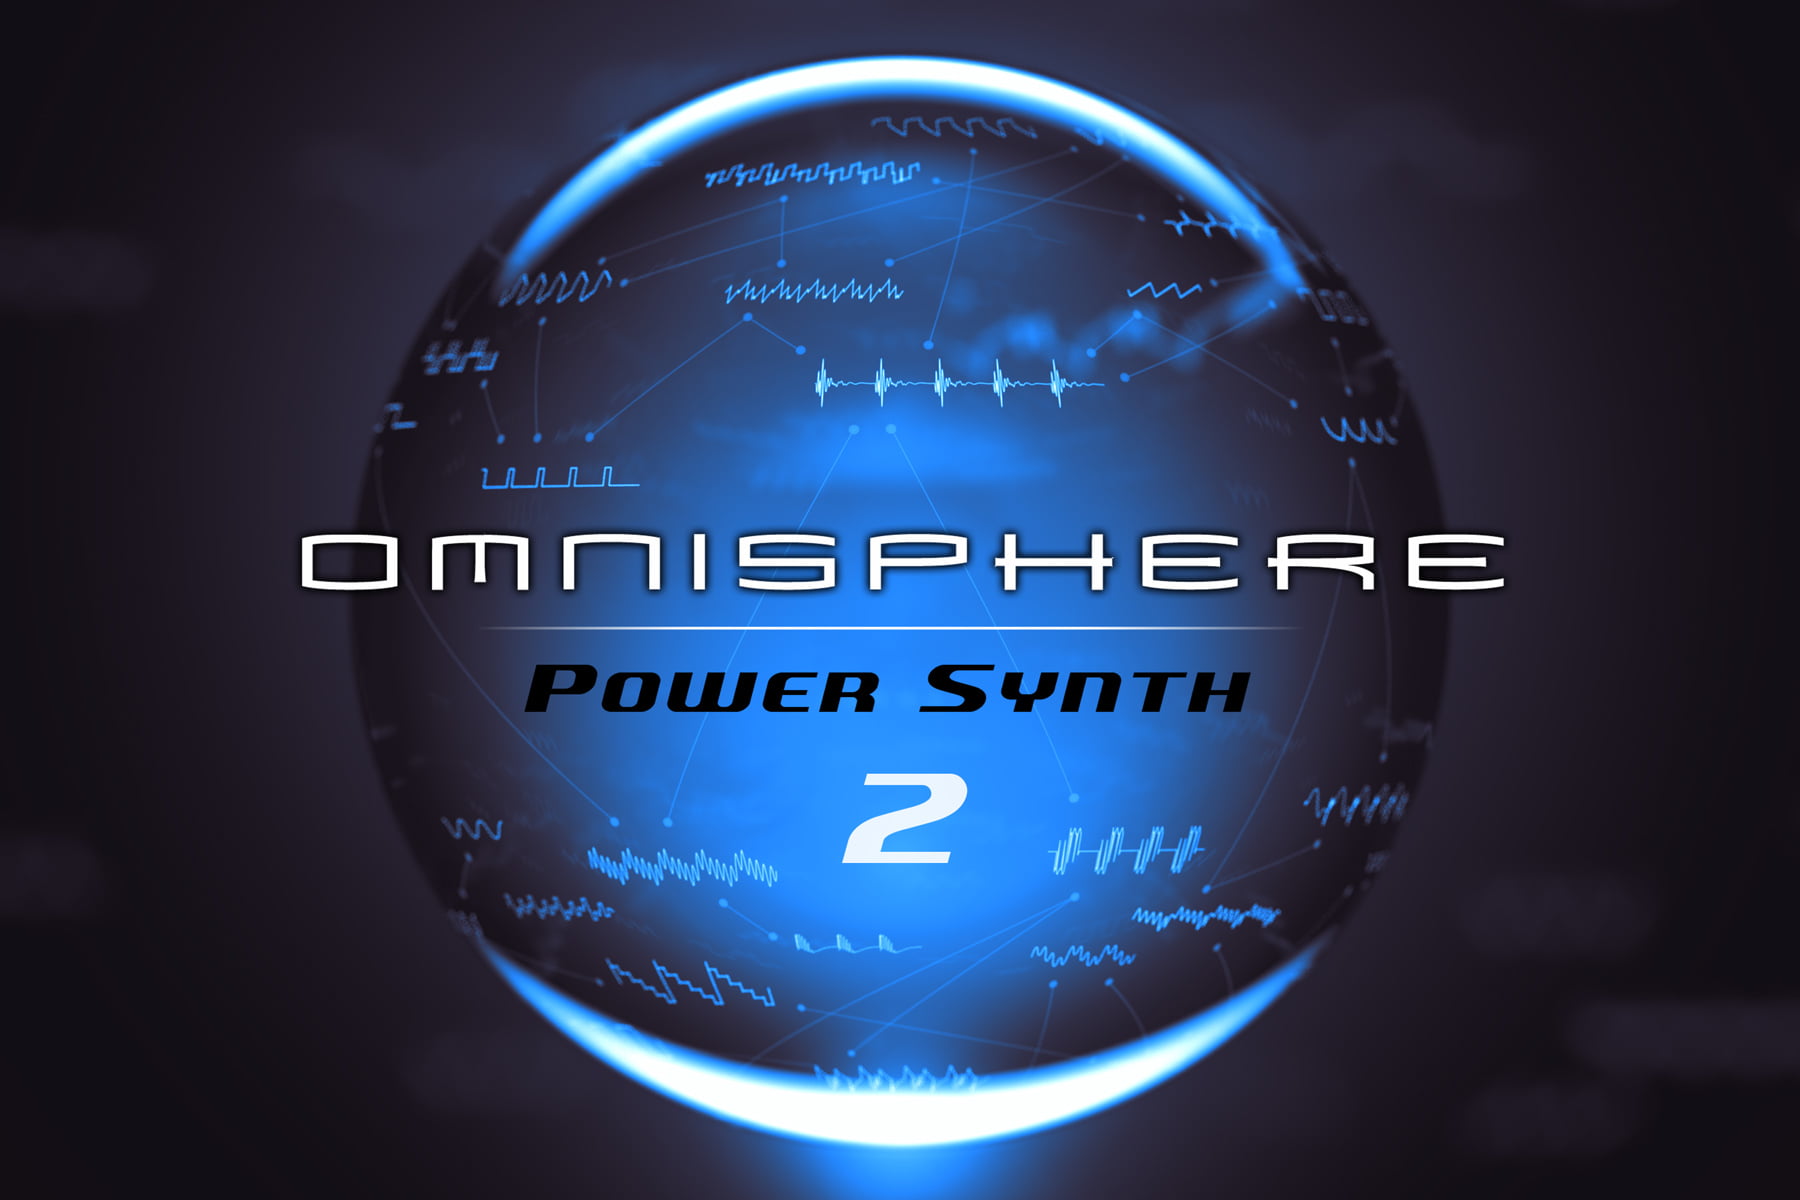 spectrasonics omnisphere only updates download size: 662 mb